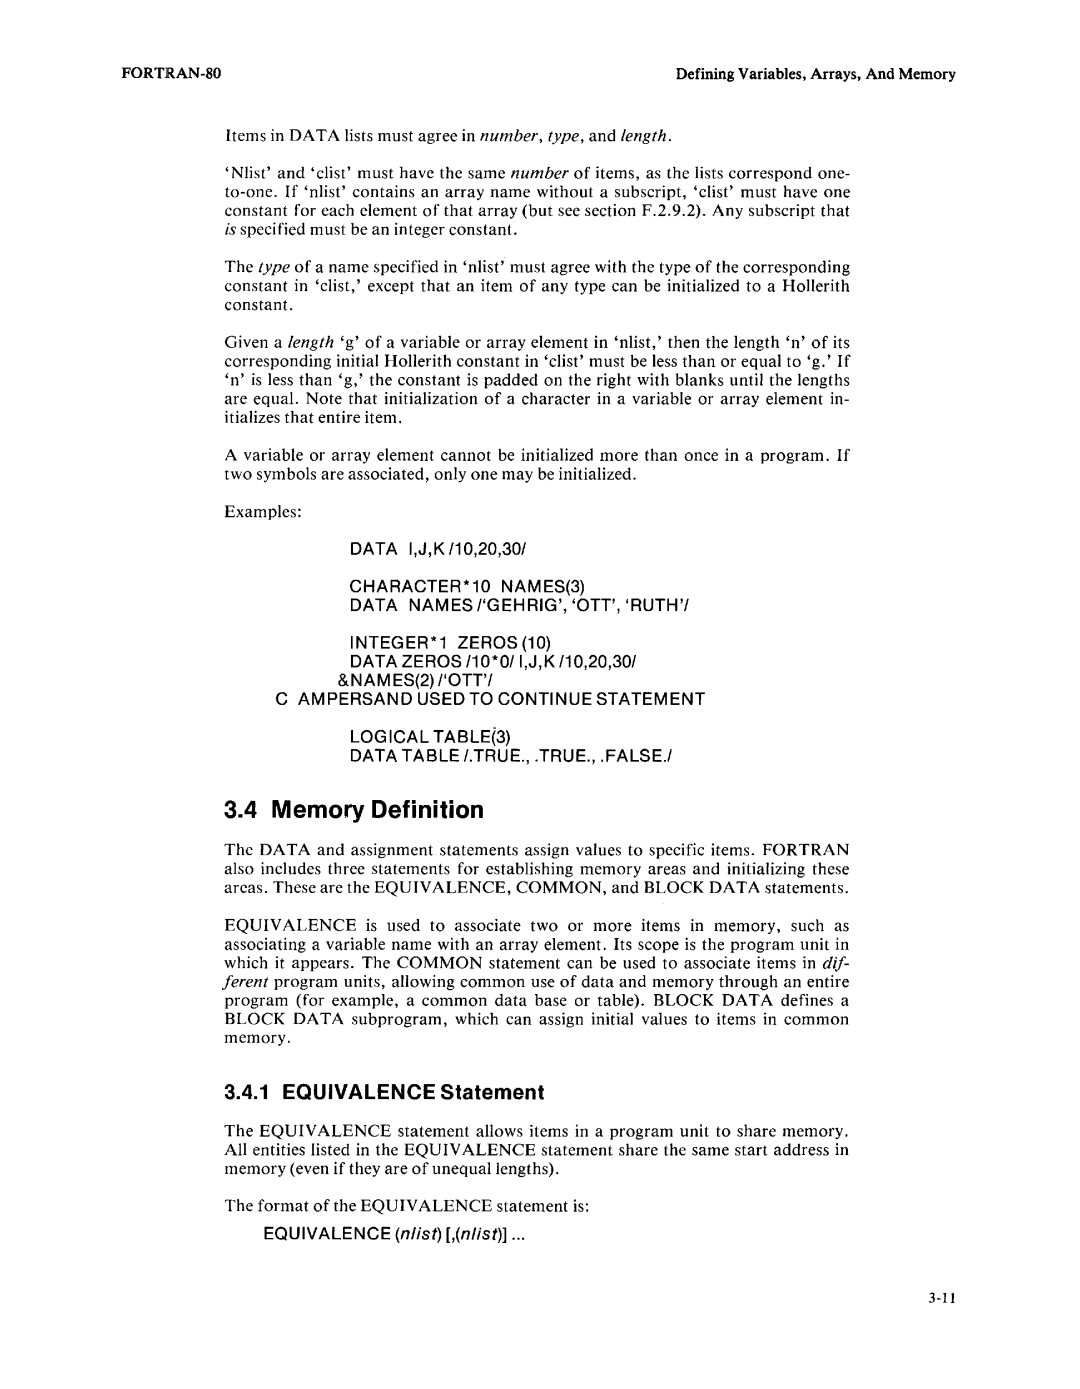 Intel fortran-80 manual EQUIVALENCE Statement, Memory Definition, DATA I,J,K/10,20,301 